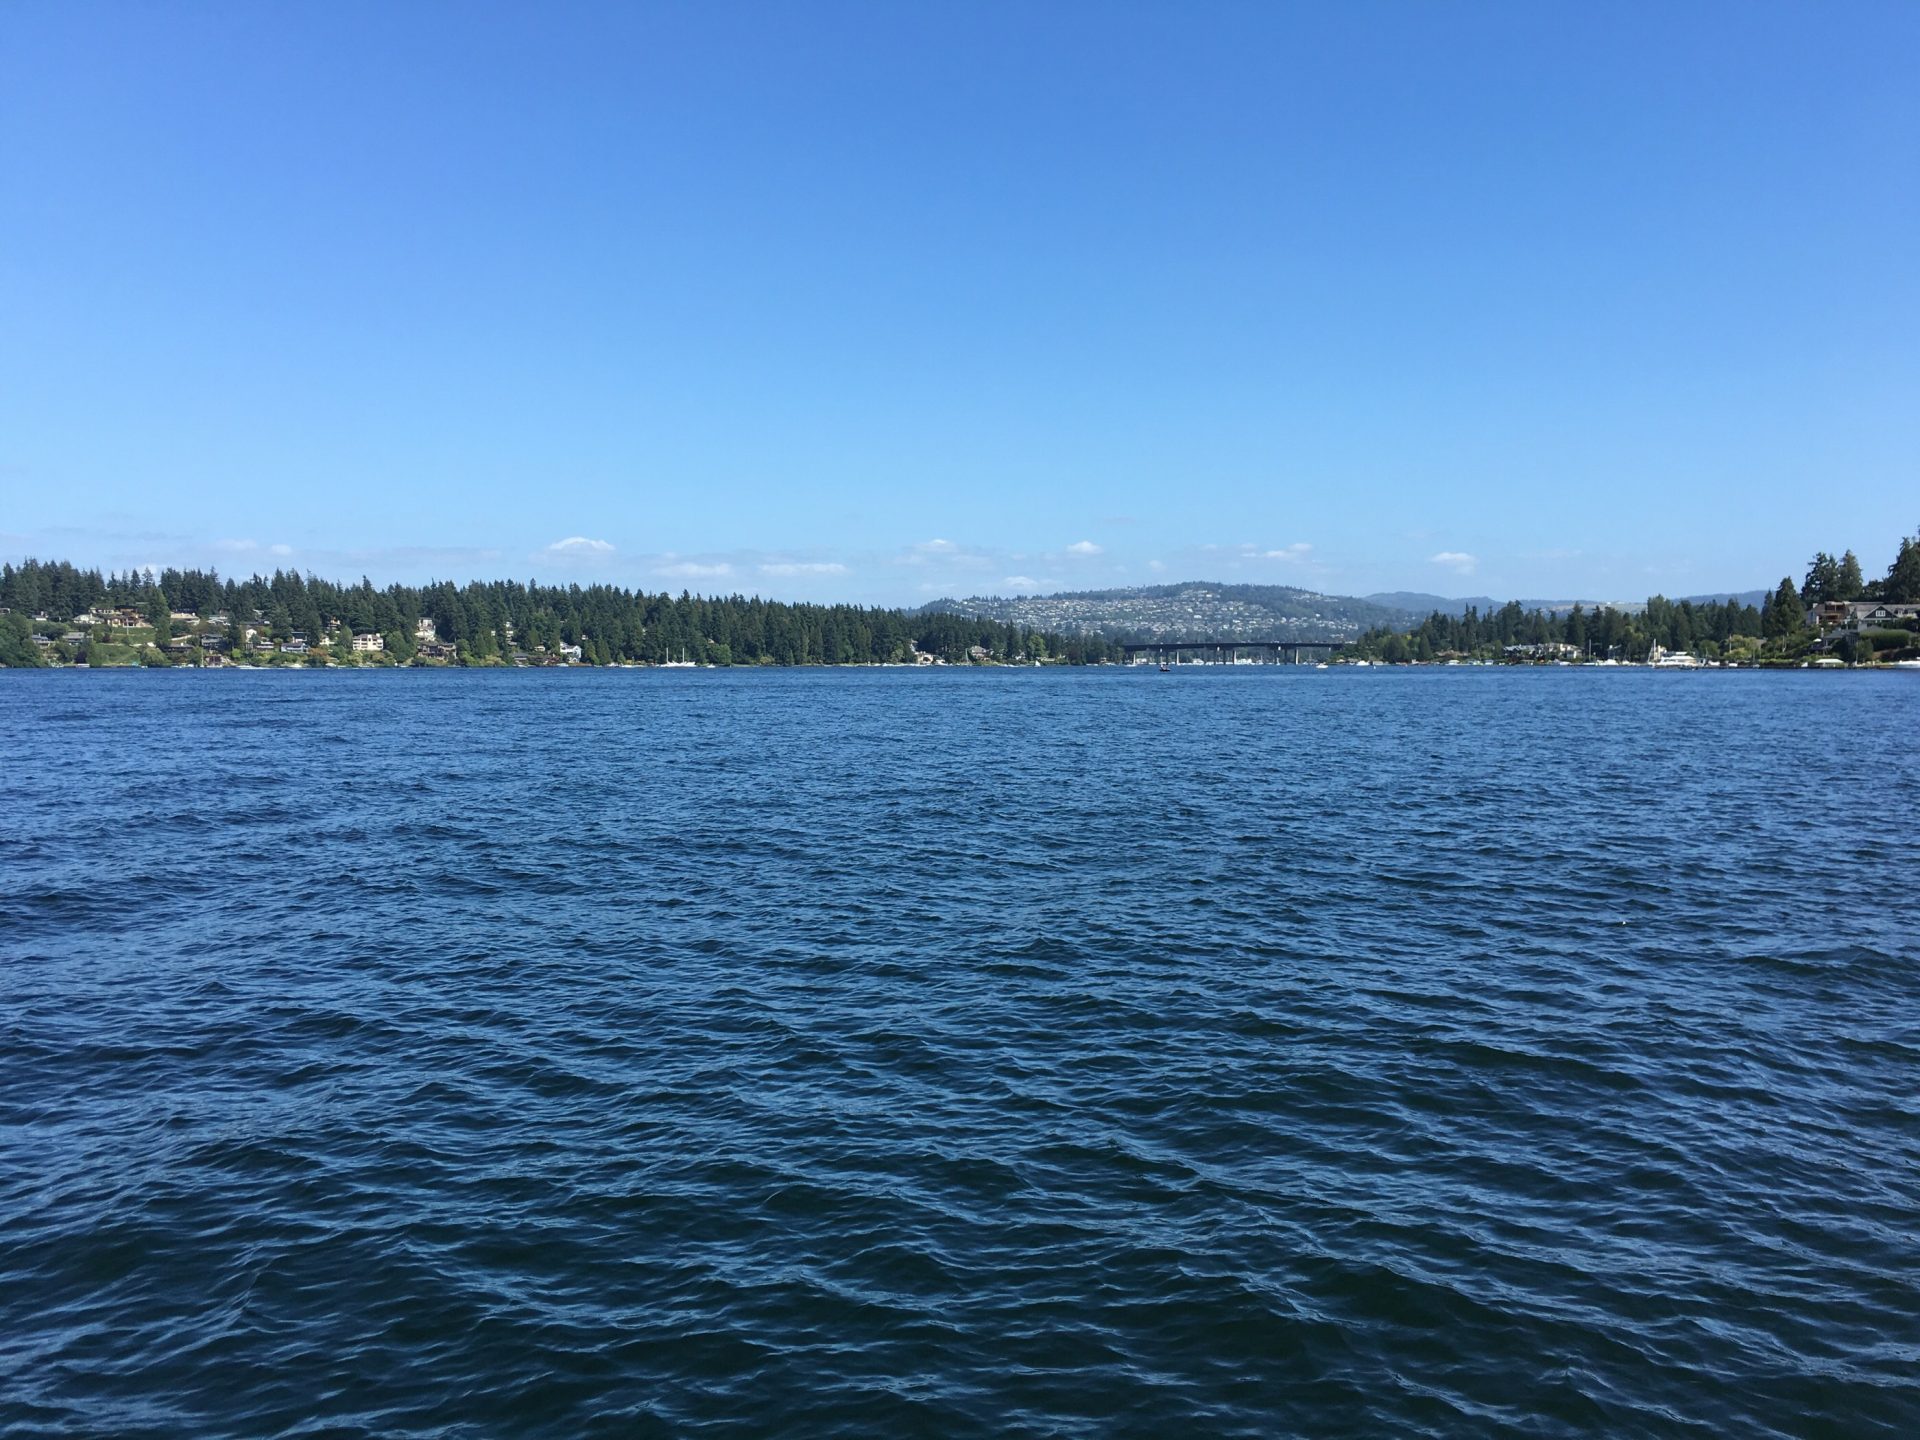 Mercer Island / WA / Lake Washington / United States - 7/30/16